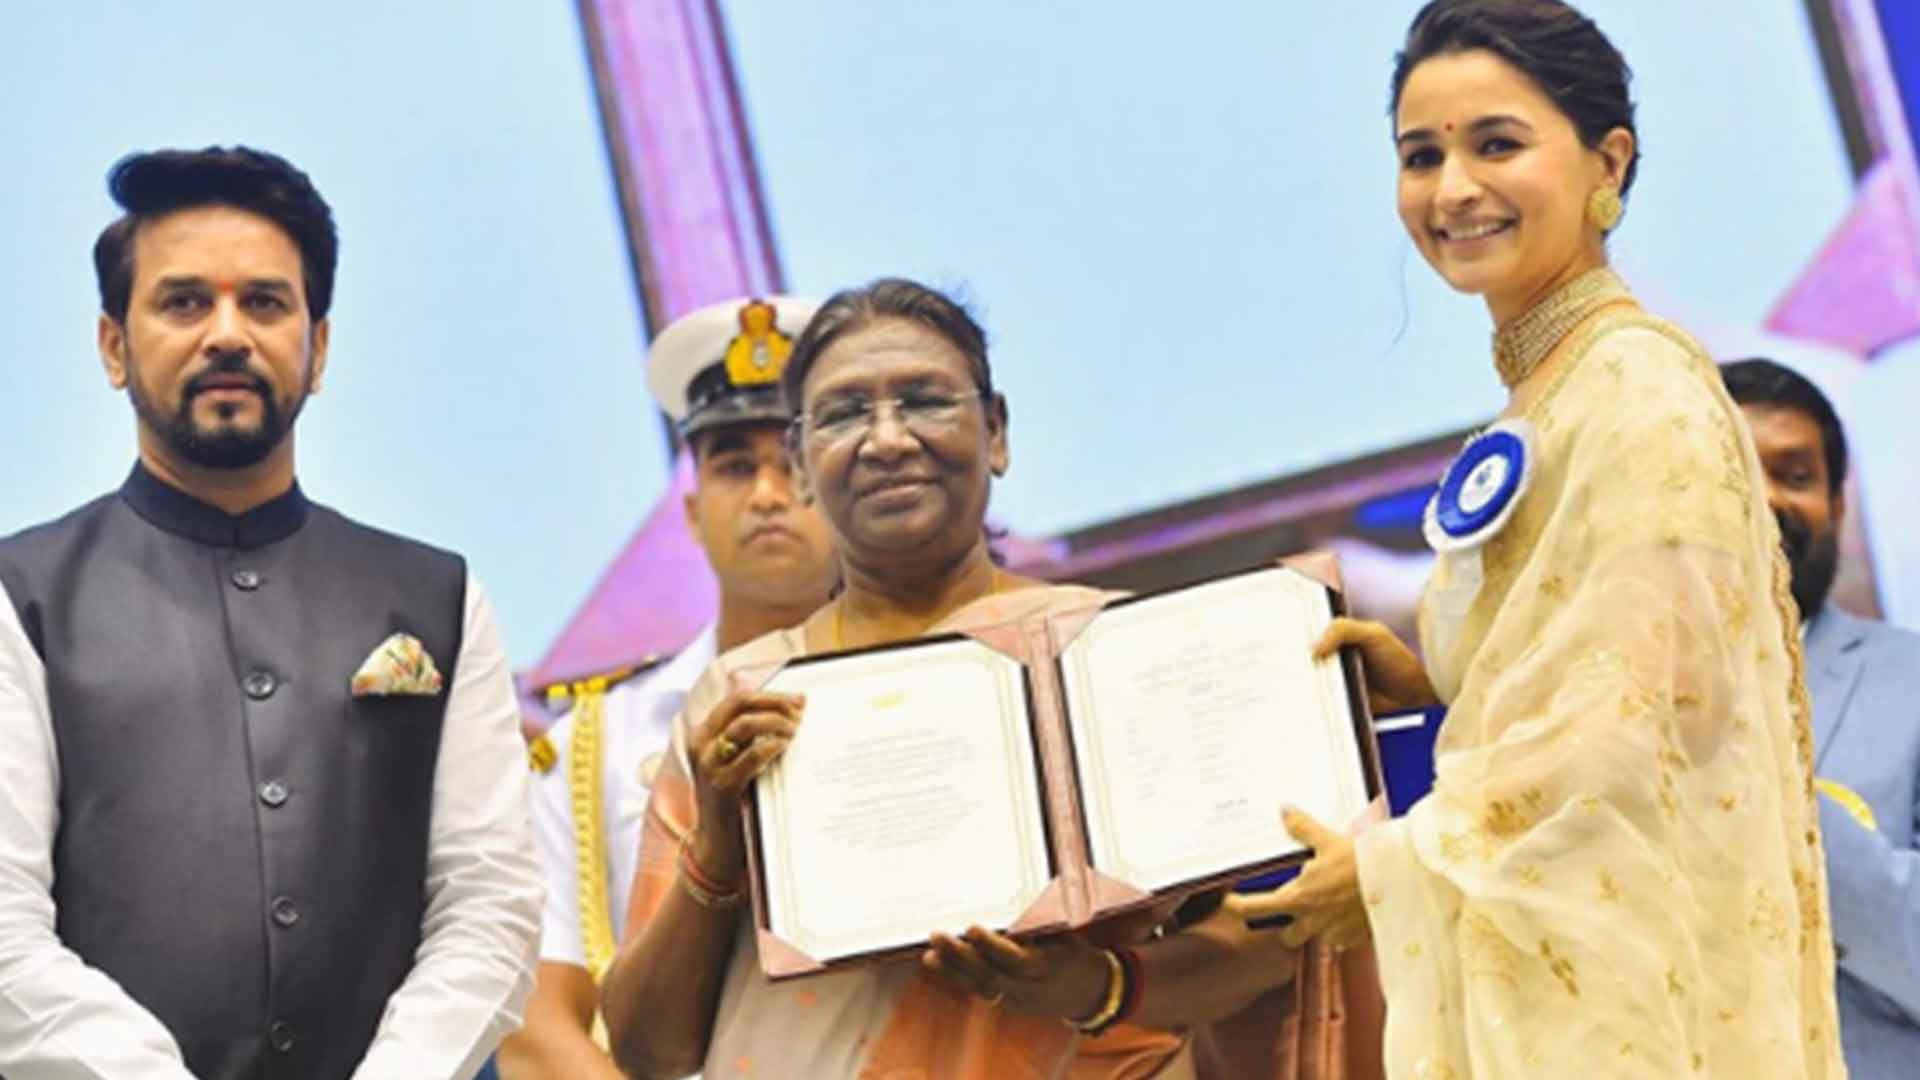 Alia Bhatt won the National Award wearing a wedding saree